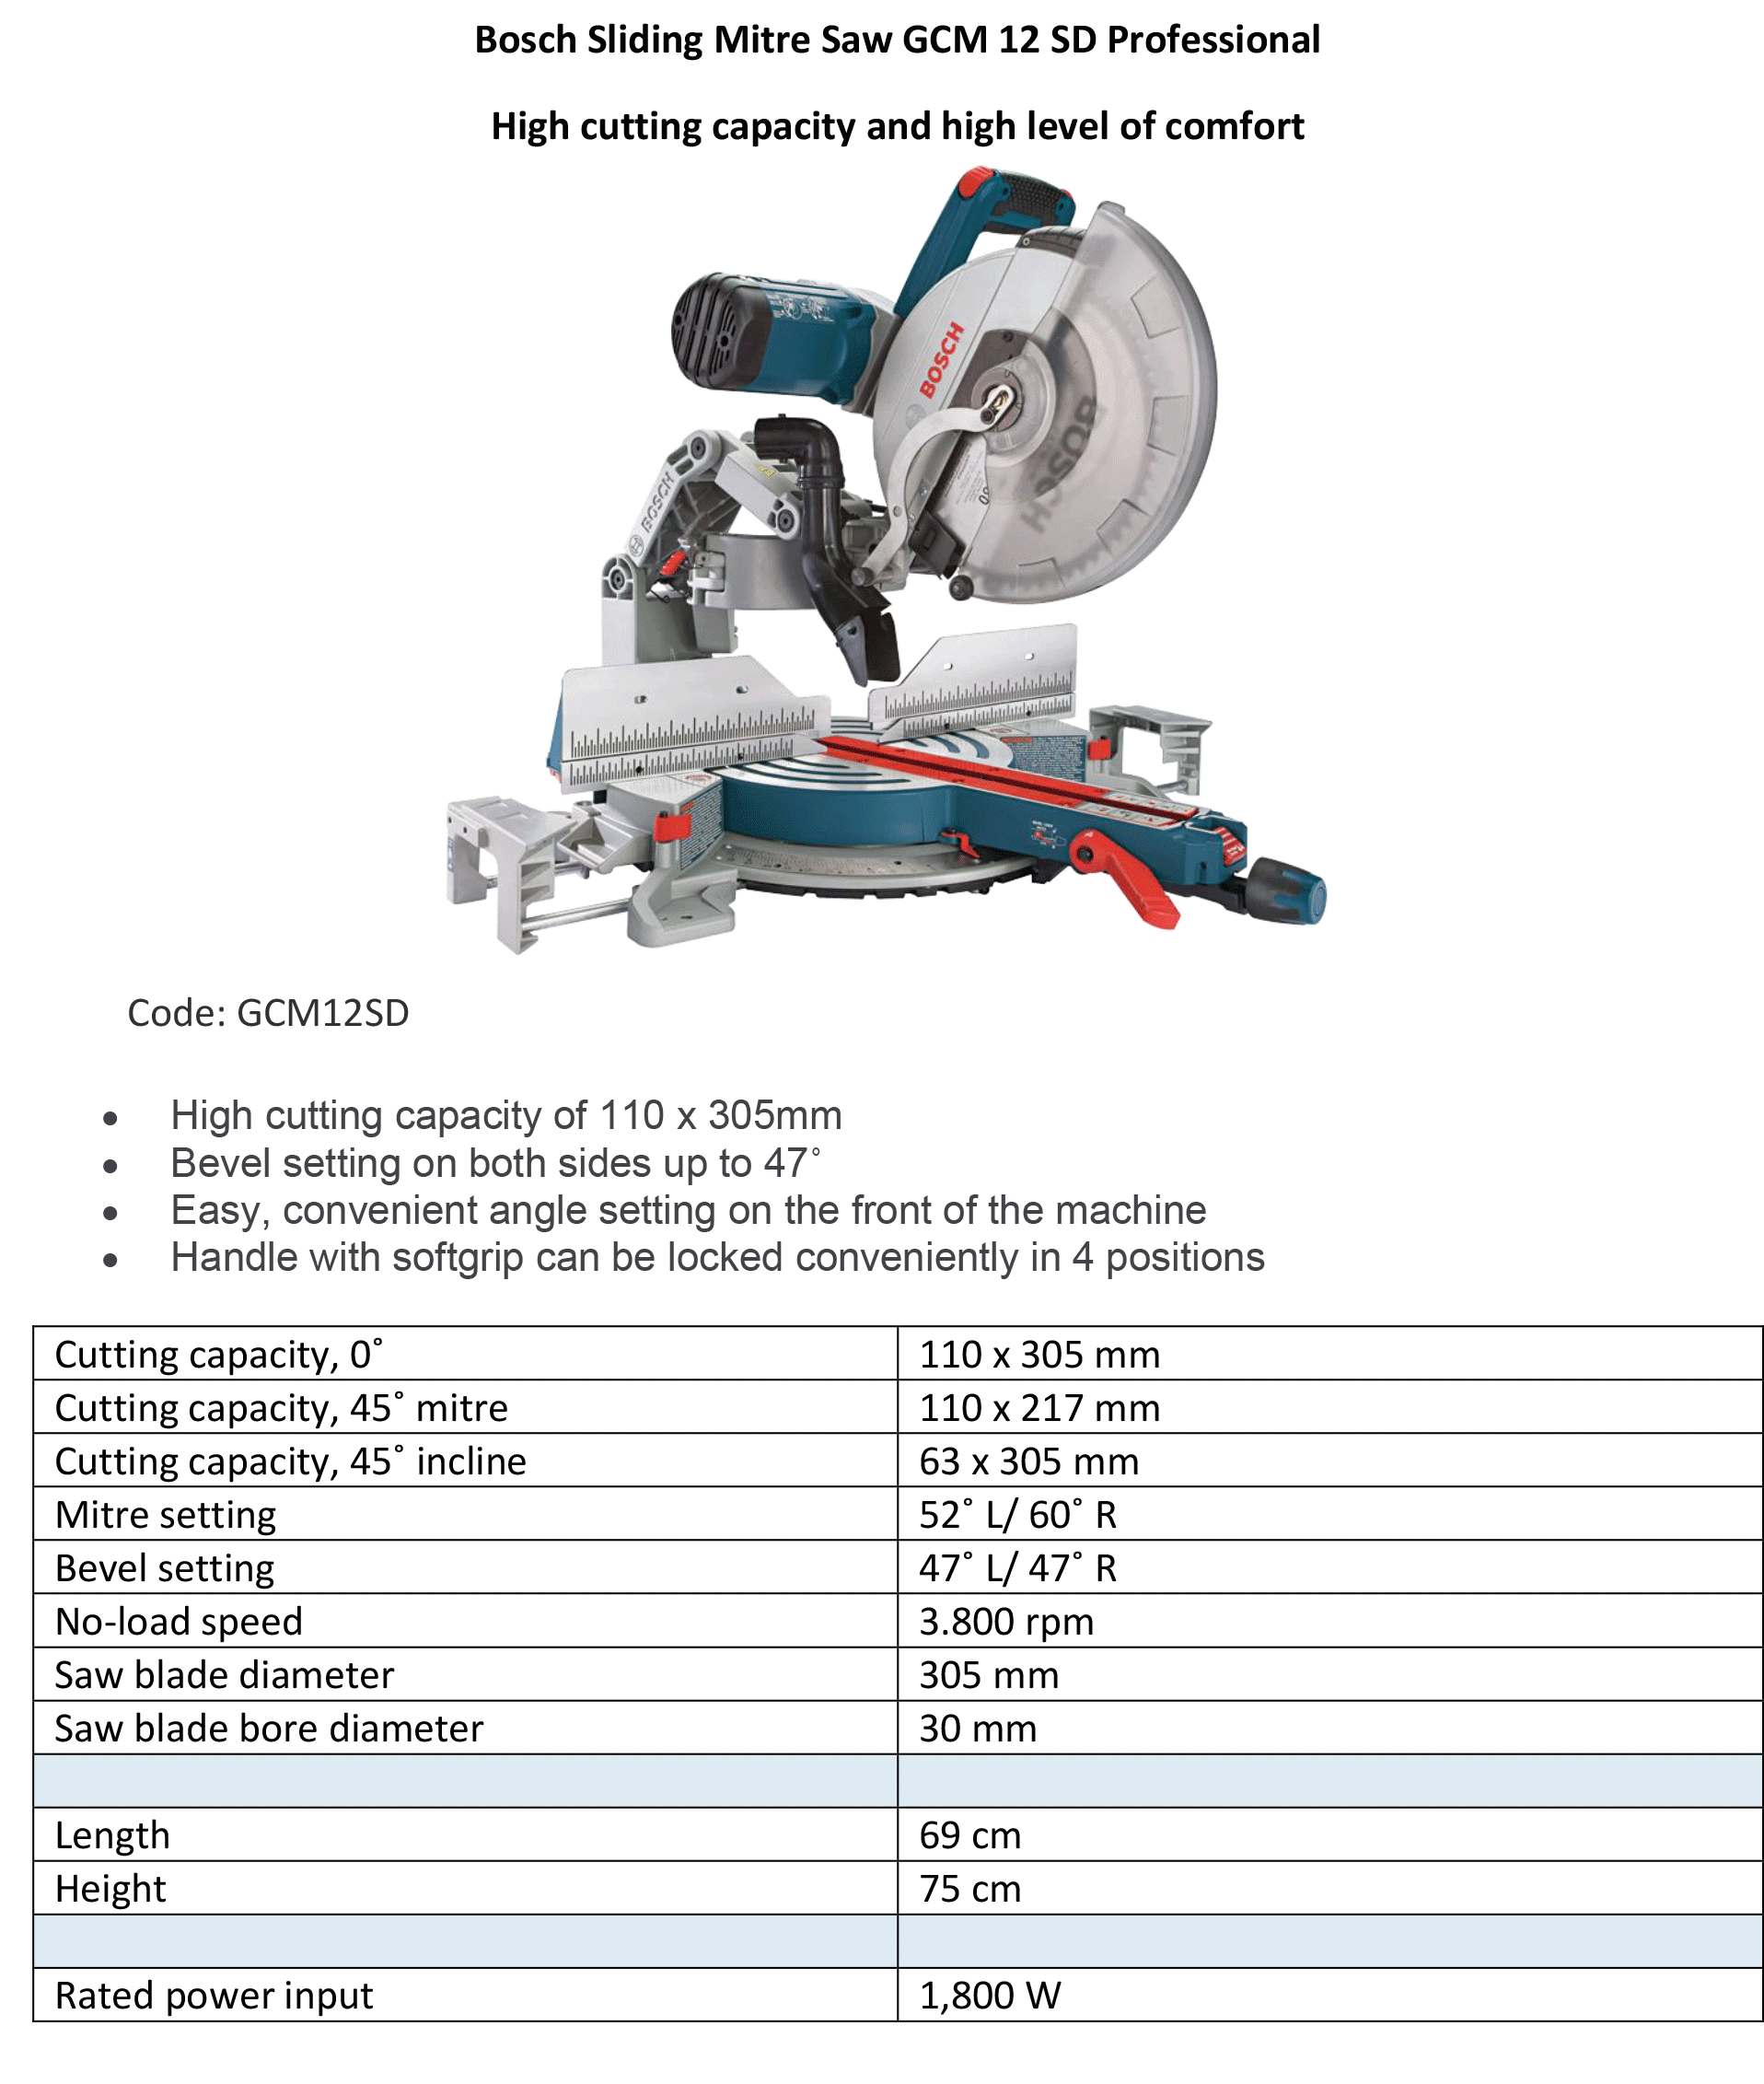 Sliding-Mitre-Saw-GCM-12-SD-Bosch-info.g